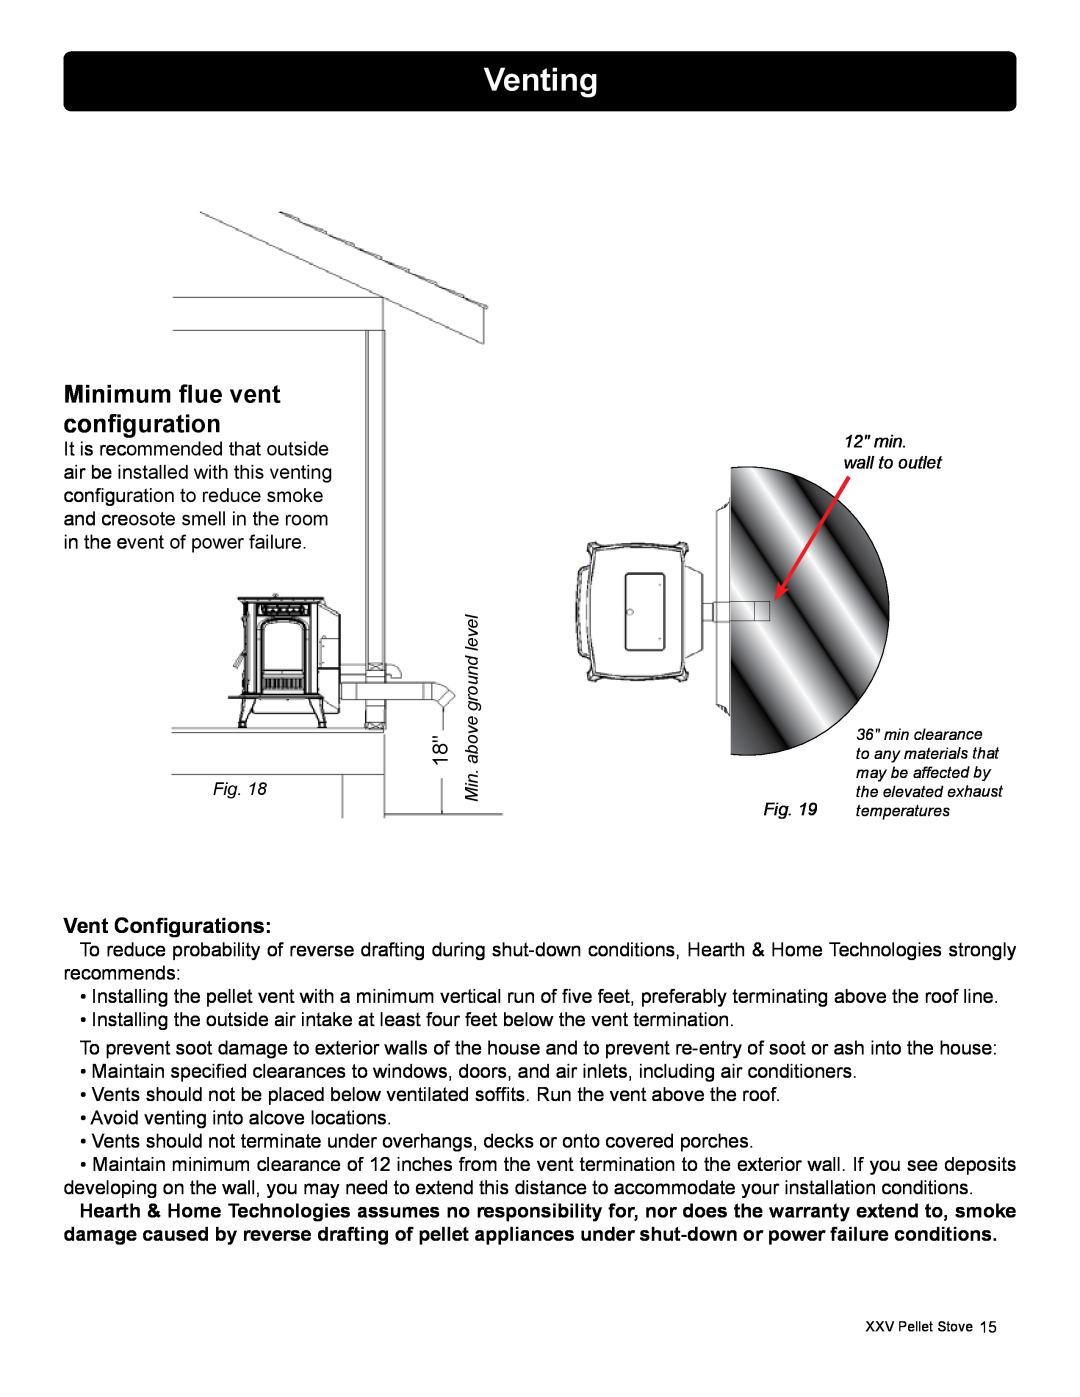 Harman Stove Company R16 manual Venting, Minimum flue vent configuration, Vent Configurations 